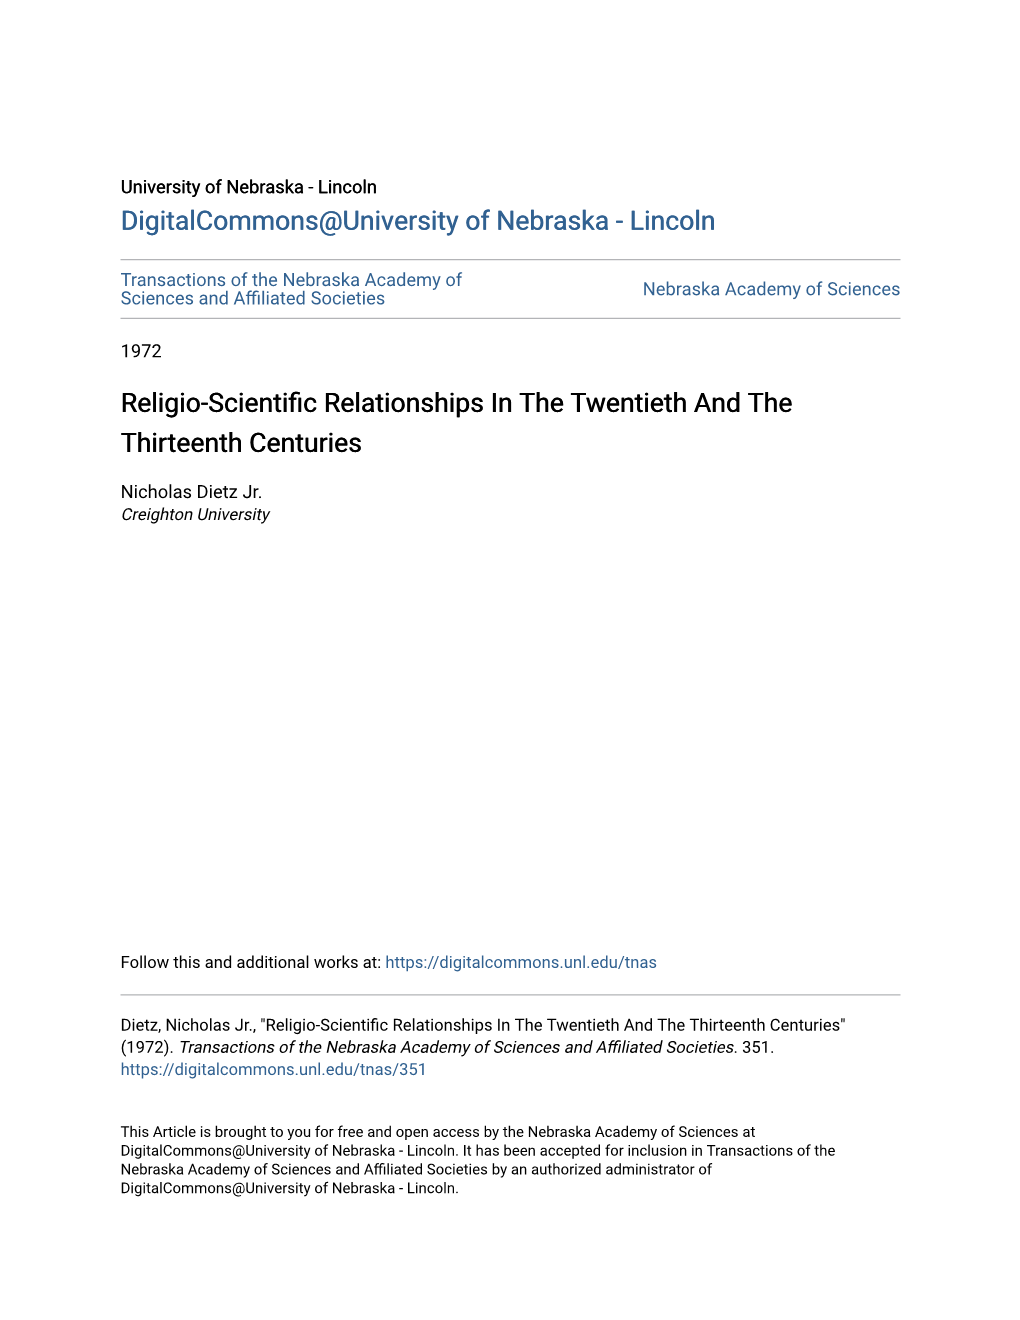 Religio-Scientific Relationships in the Twentieth and the Thirteenth Centuries